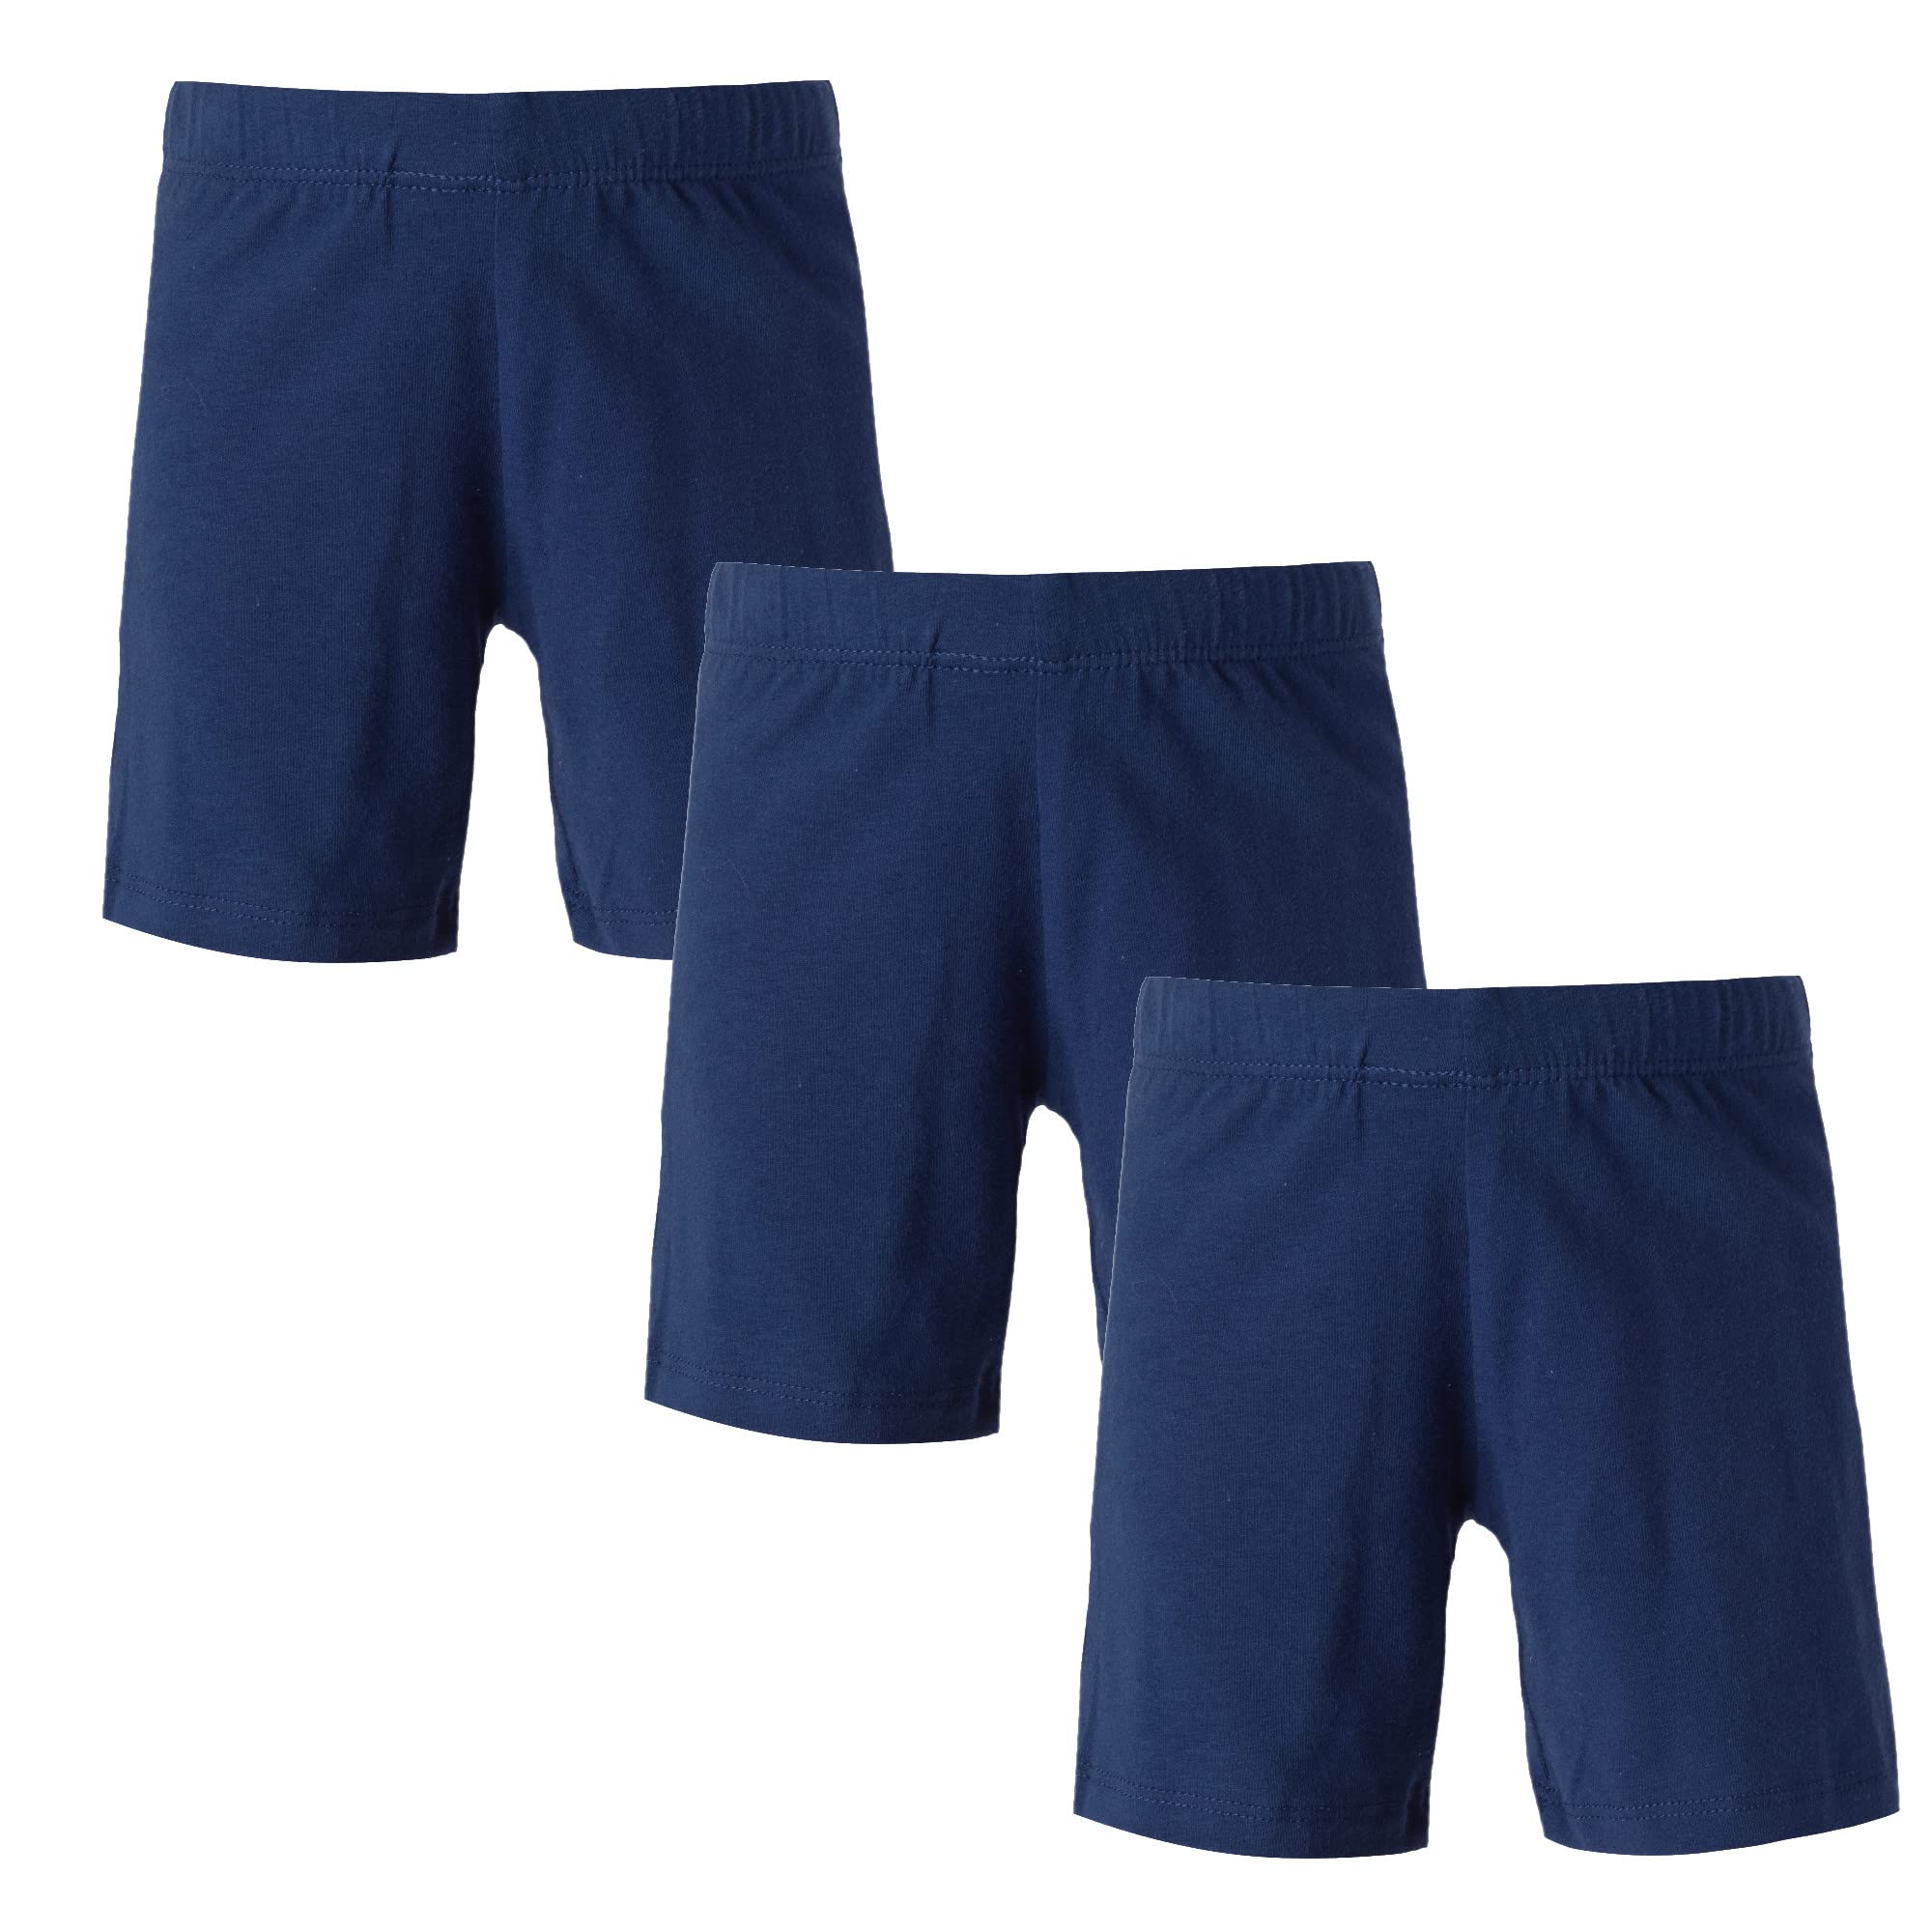 MY WAY Toddlers & Girls Bike Shorts Cotton & Spandex — Biker Shorts for Under Dresses, Cartwheel & Dance - 3 Pack Sizes 2T-16